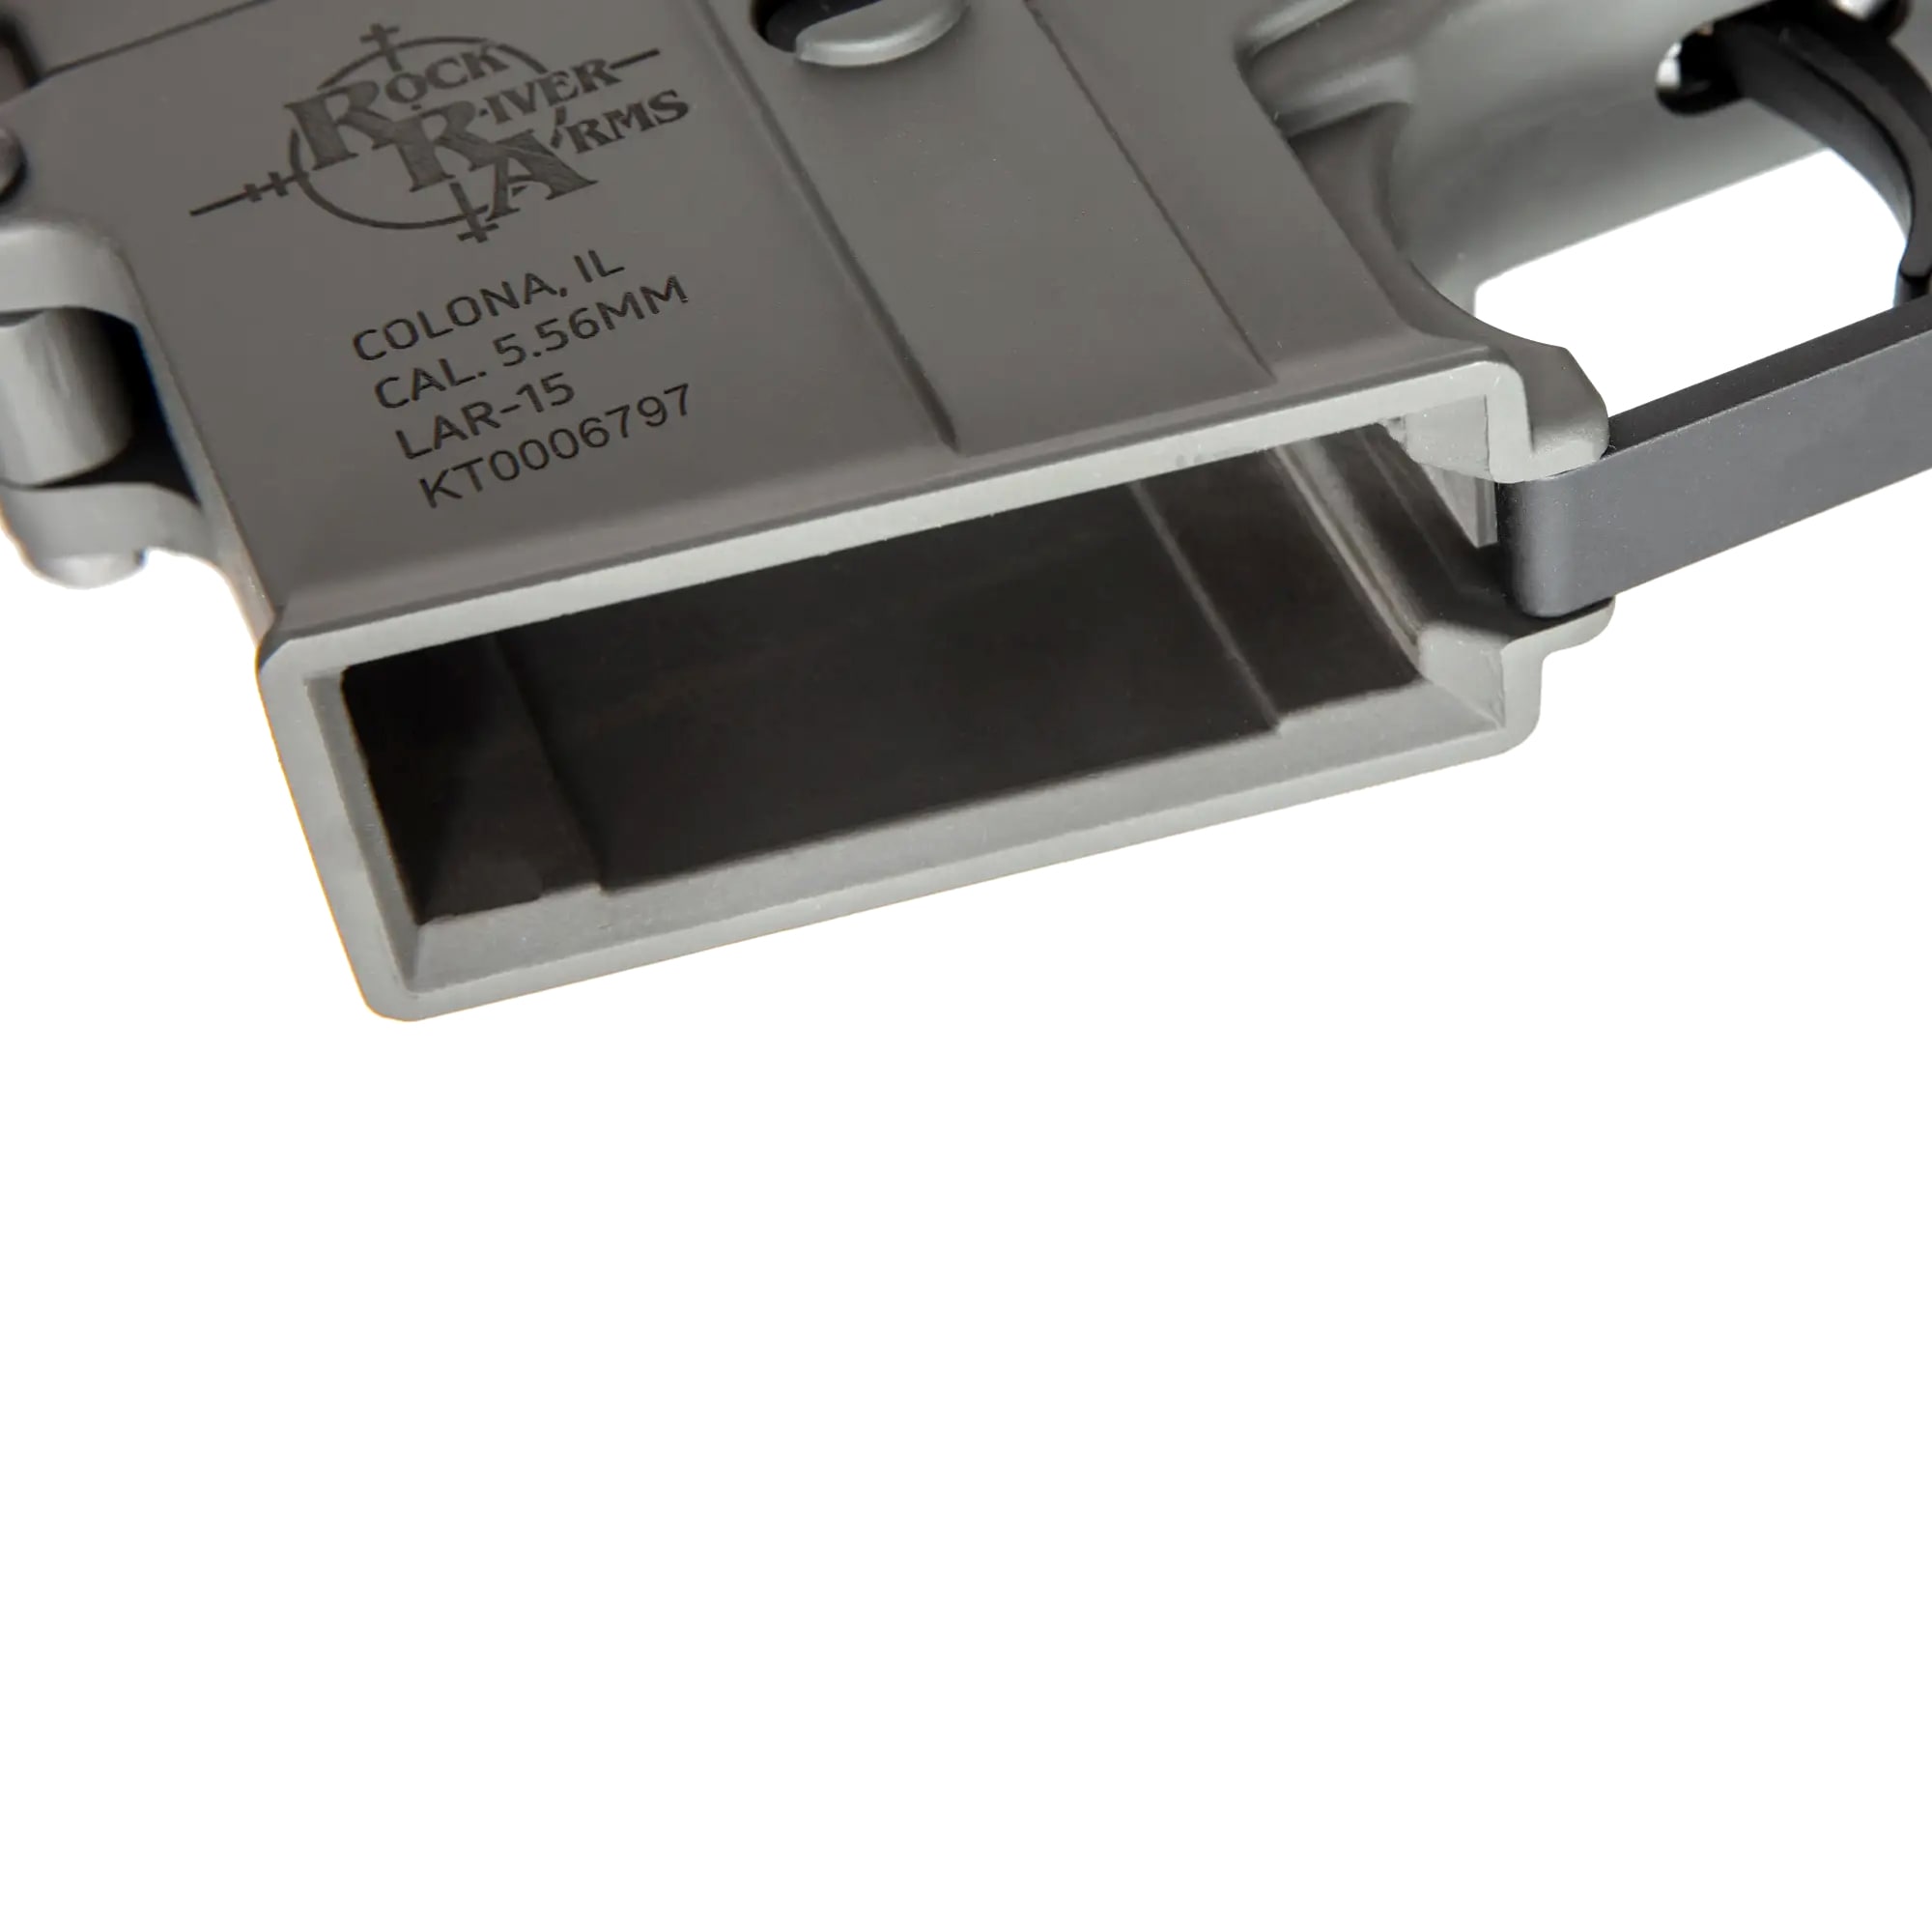 Karabinek szturmowy AEG Specna Arms SA-E04 Edge - Chaos Grey 